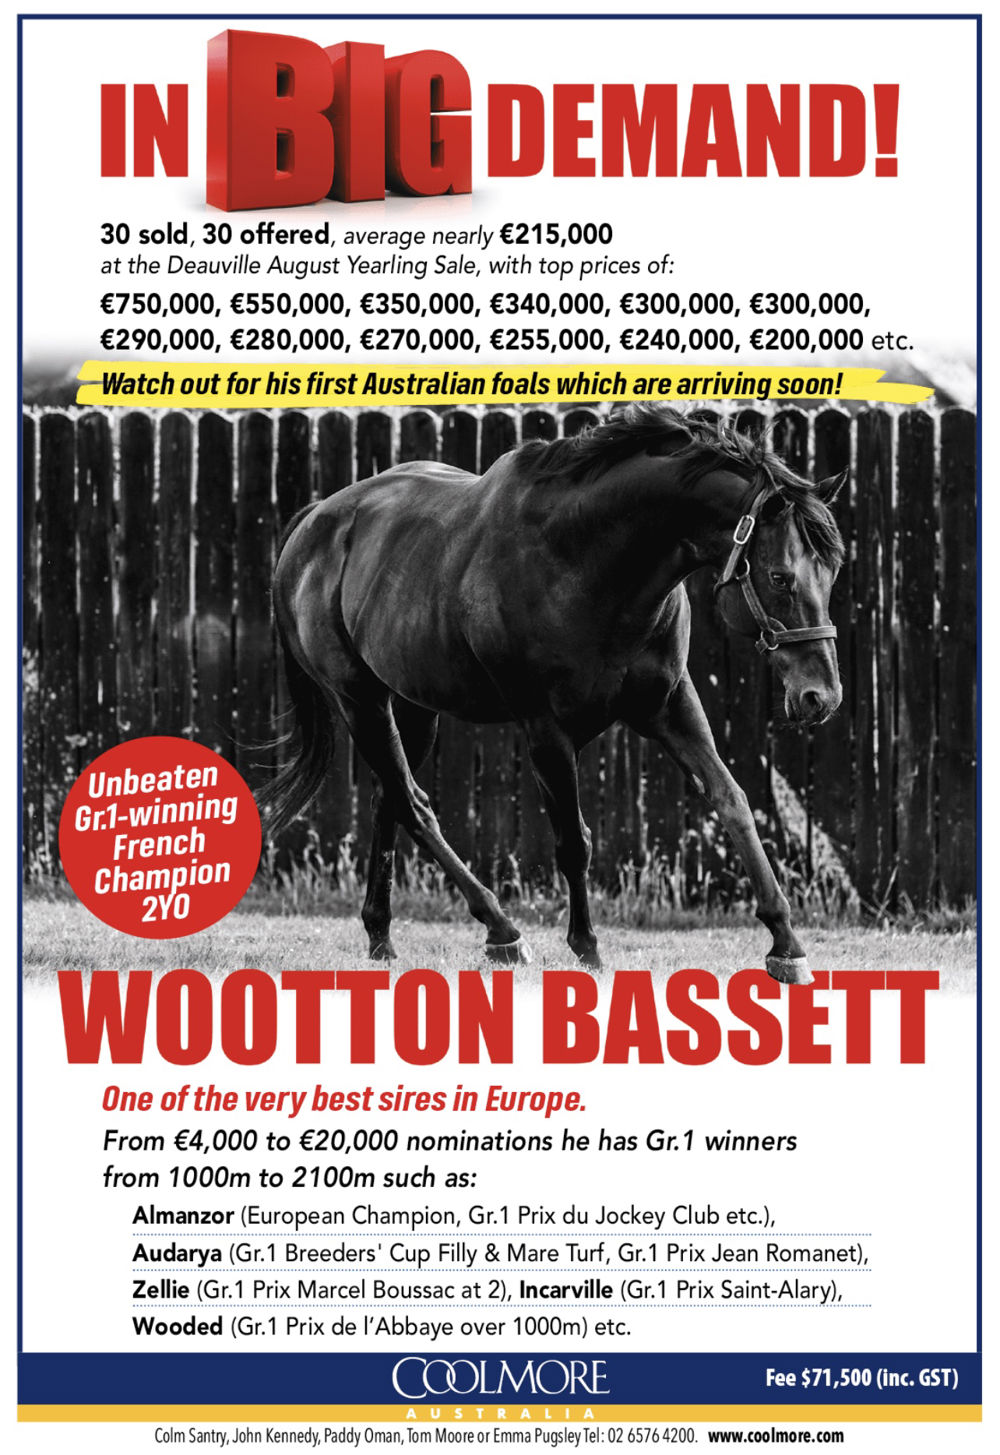 Wootton Bassett